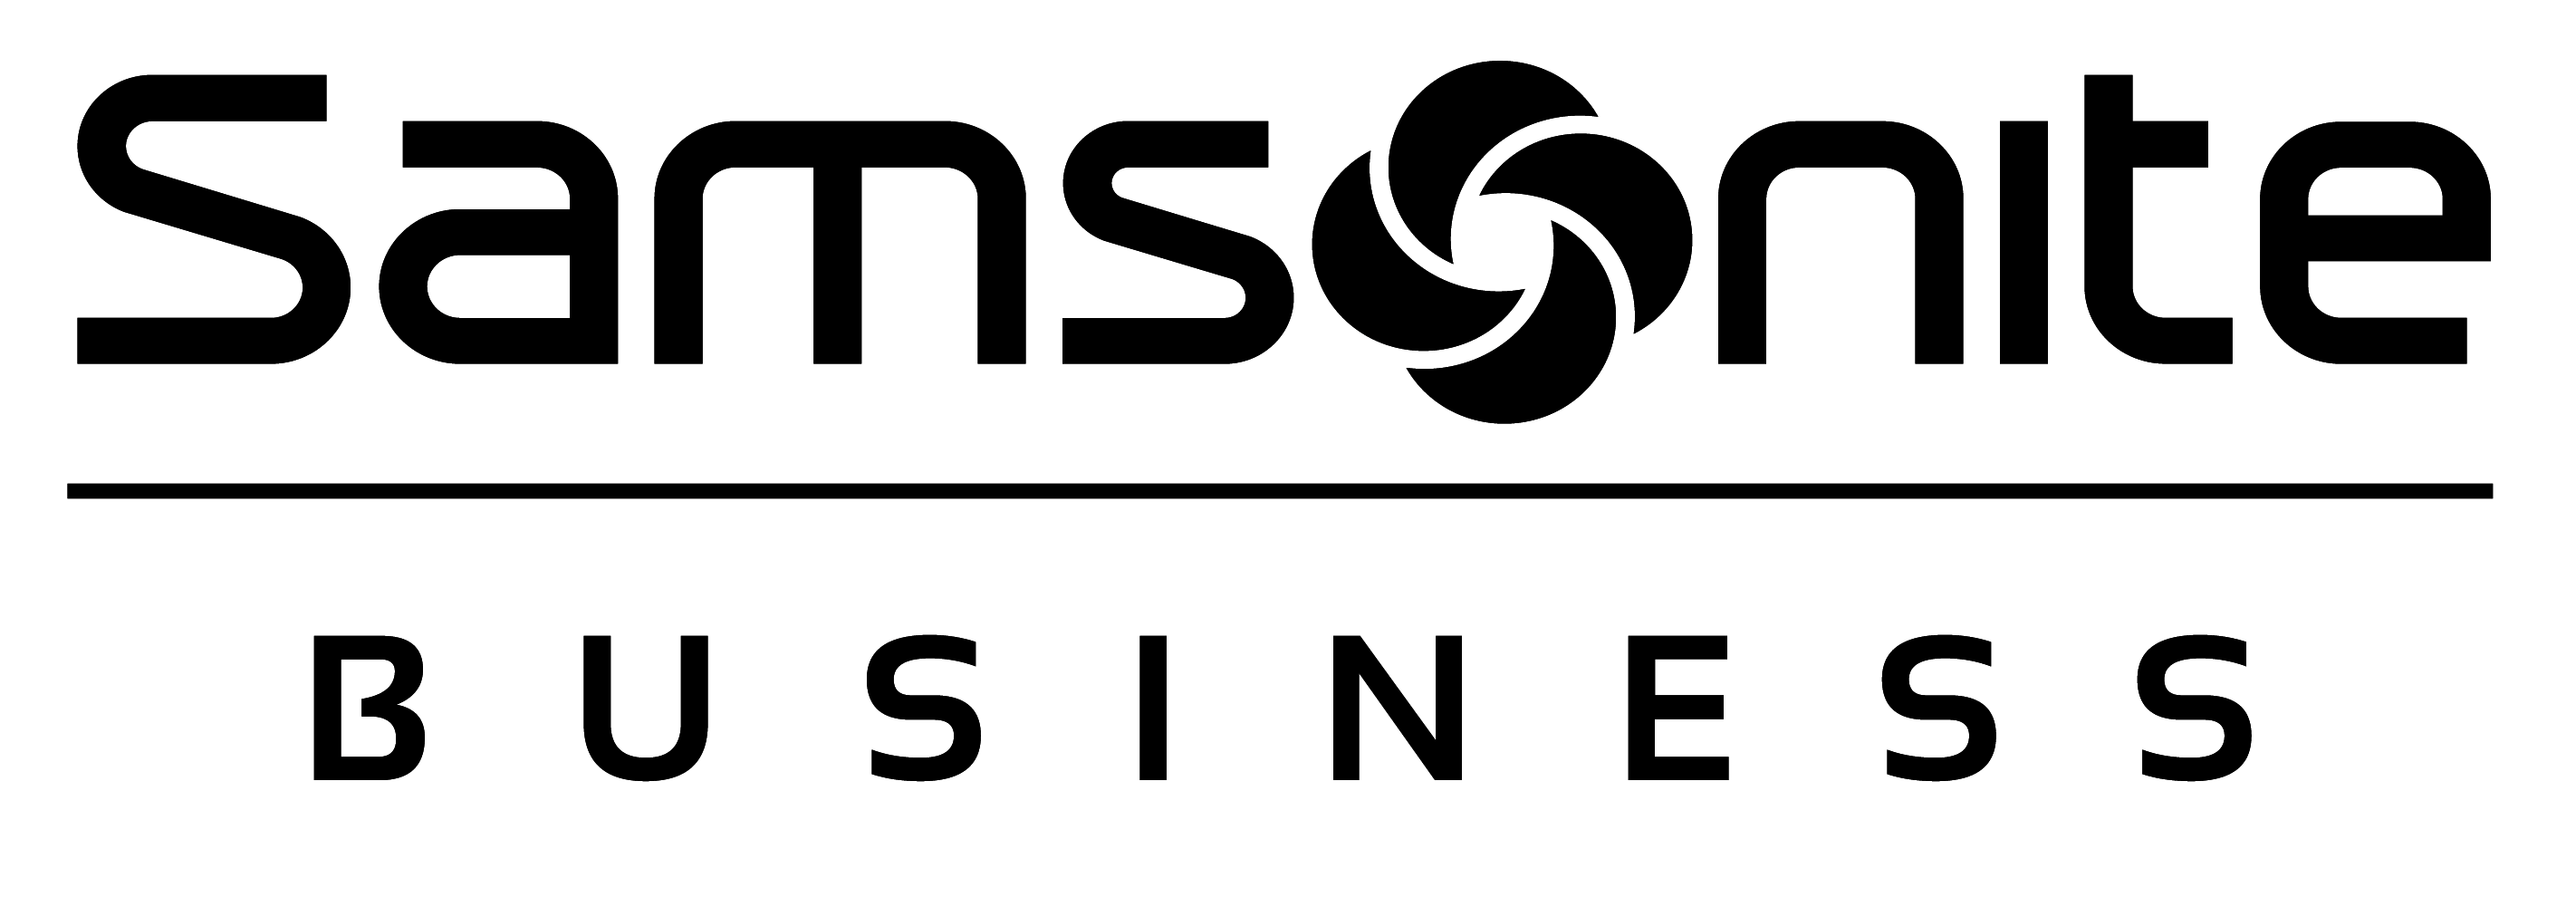 Samsonite Logo - Samsonite Logos